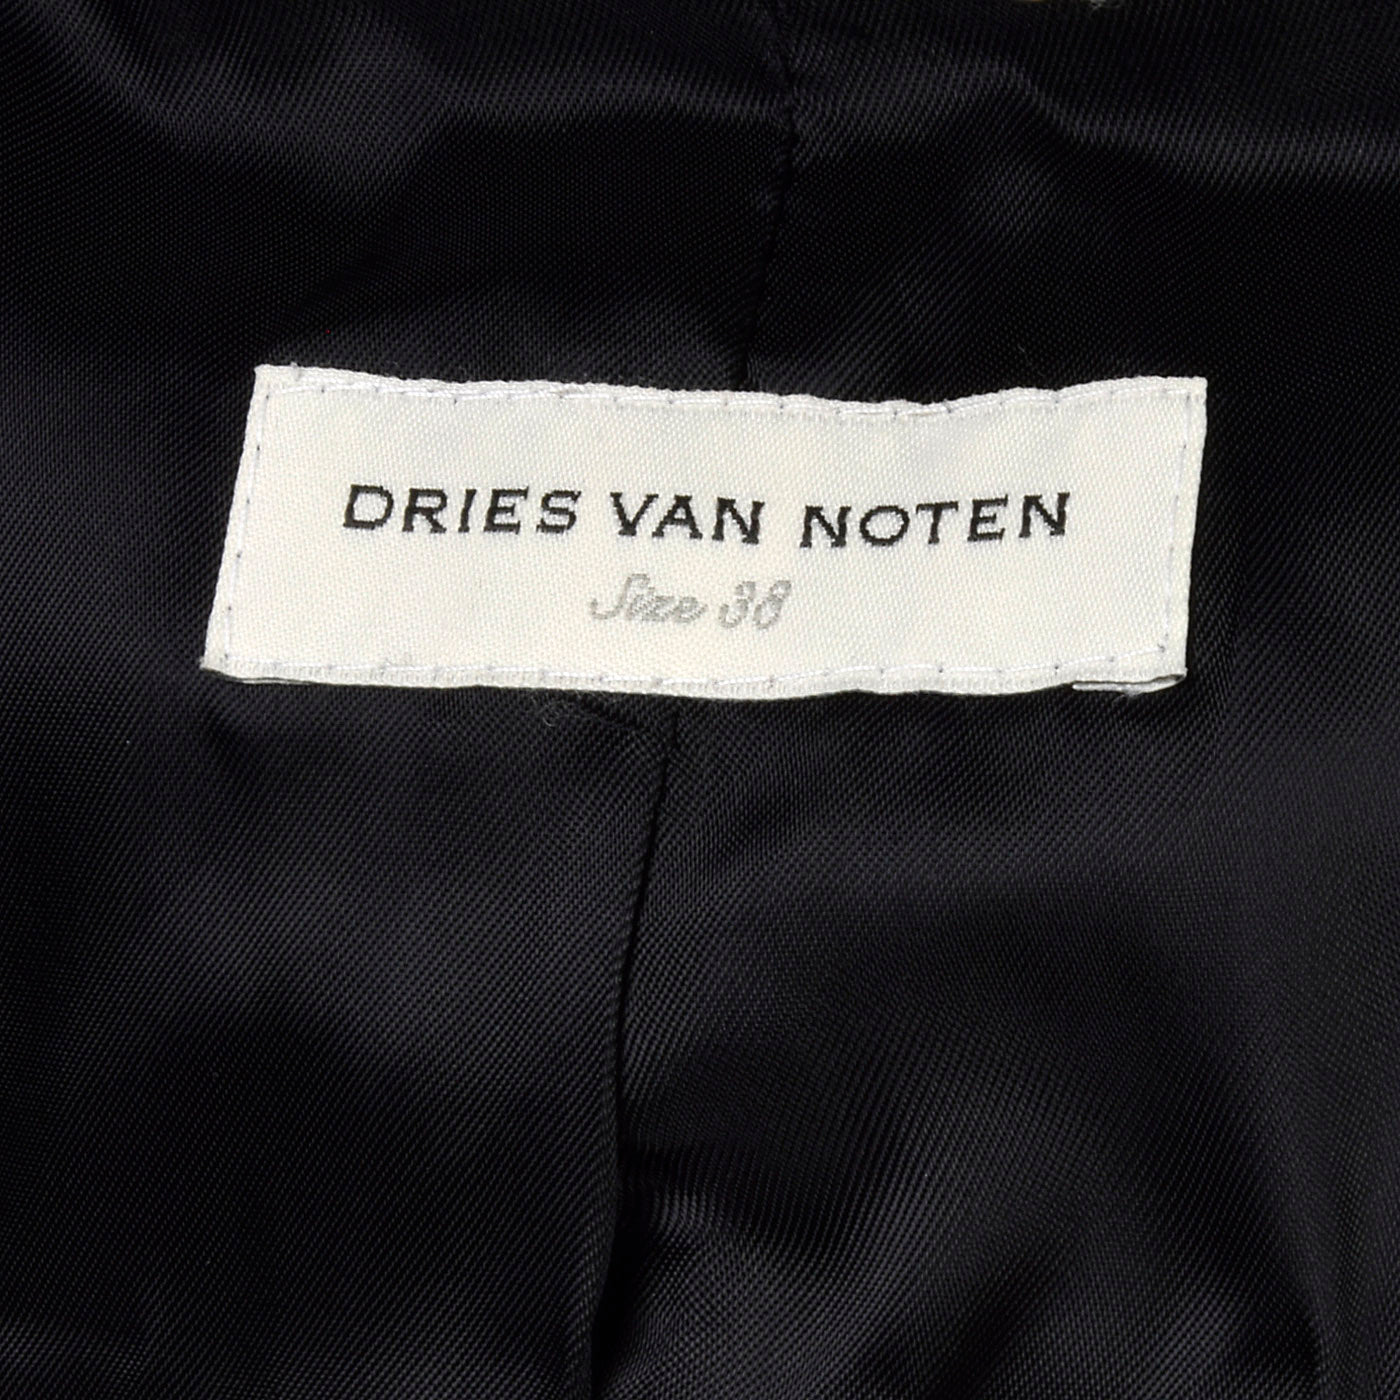 2000s Dries Van Noten Black and White Jacket